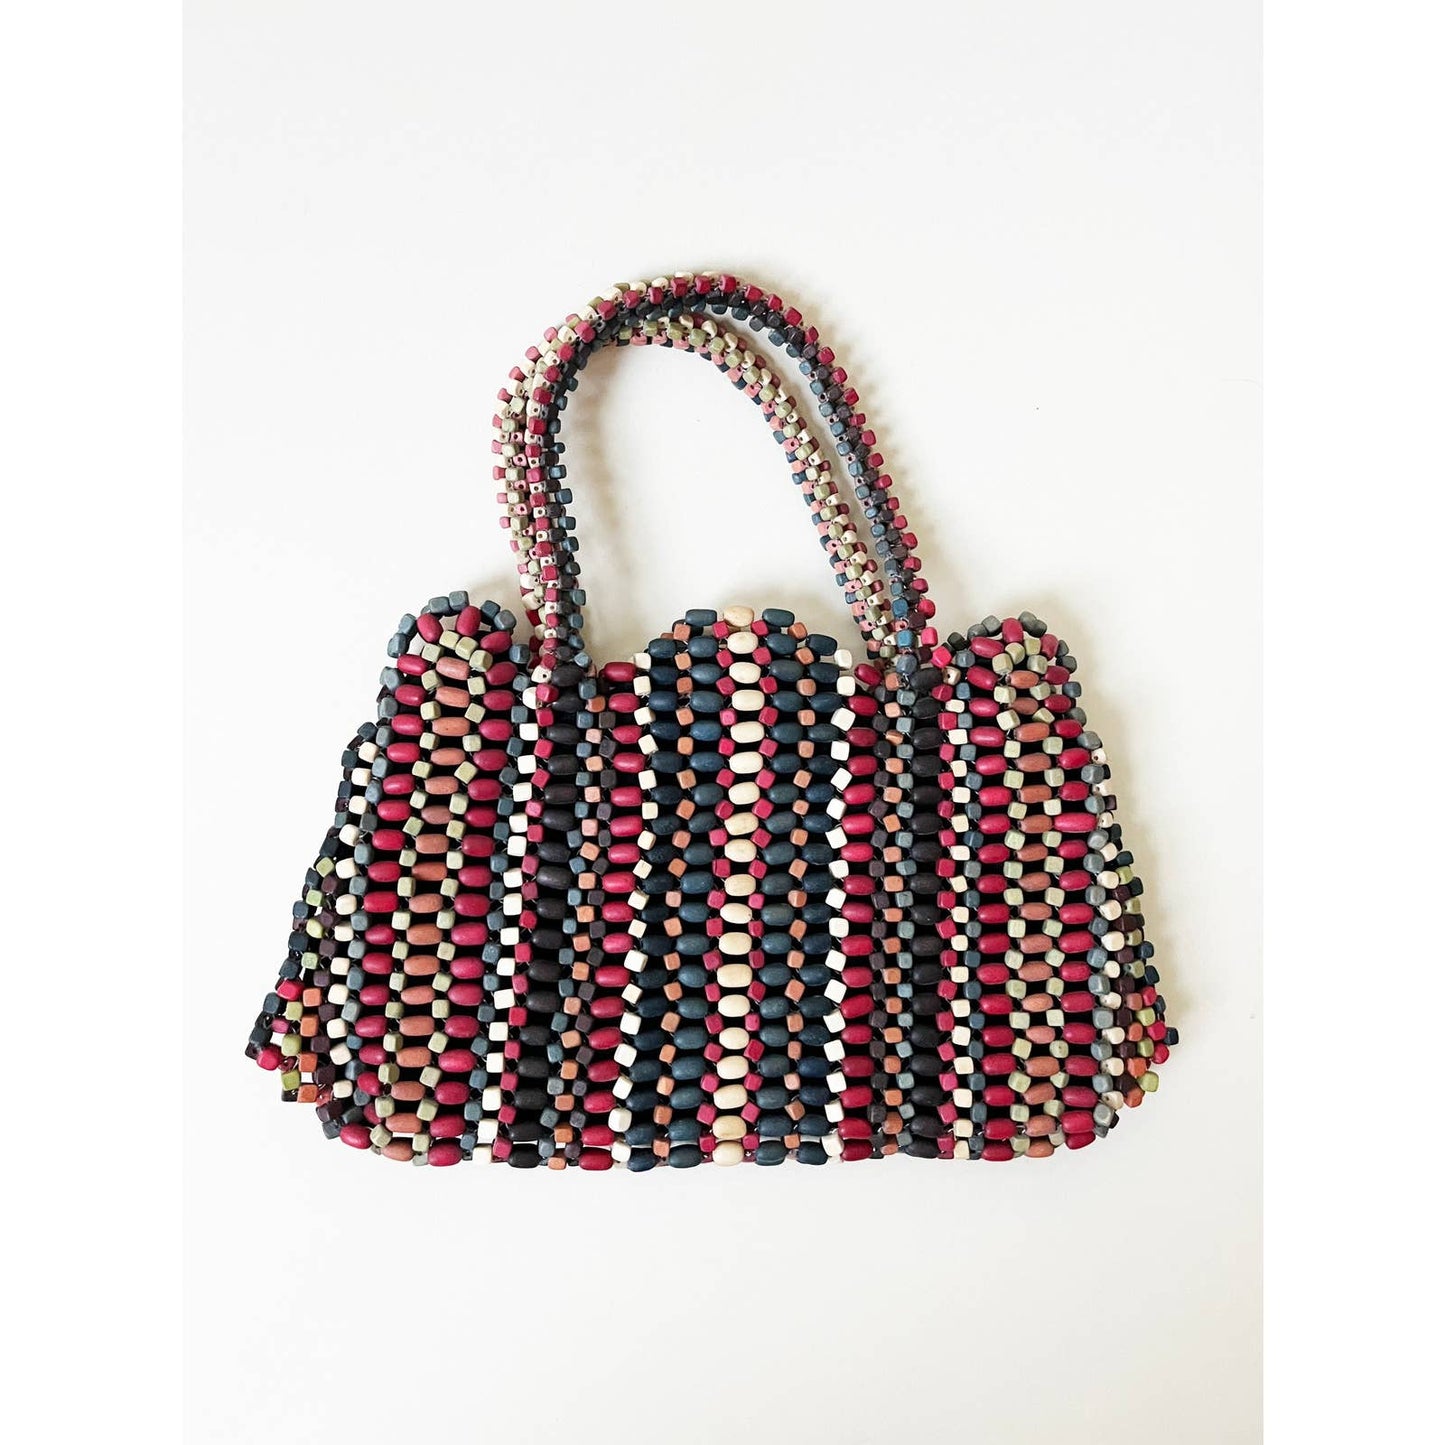 Jewel Tone Bead Handbag